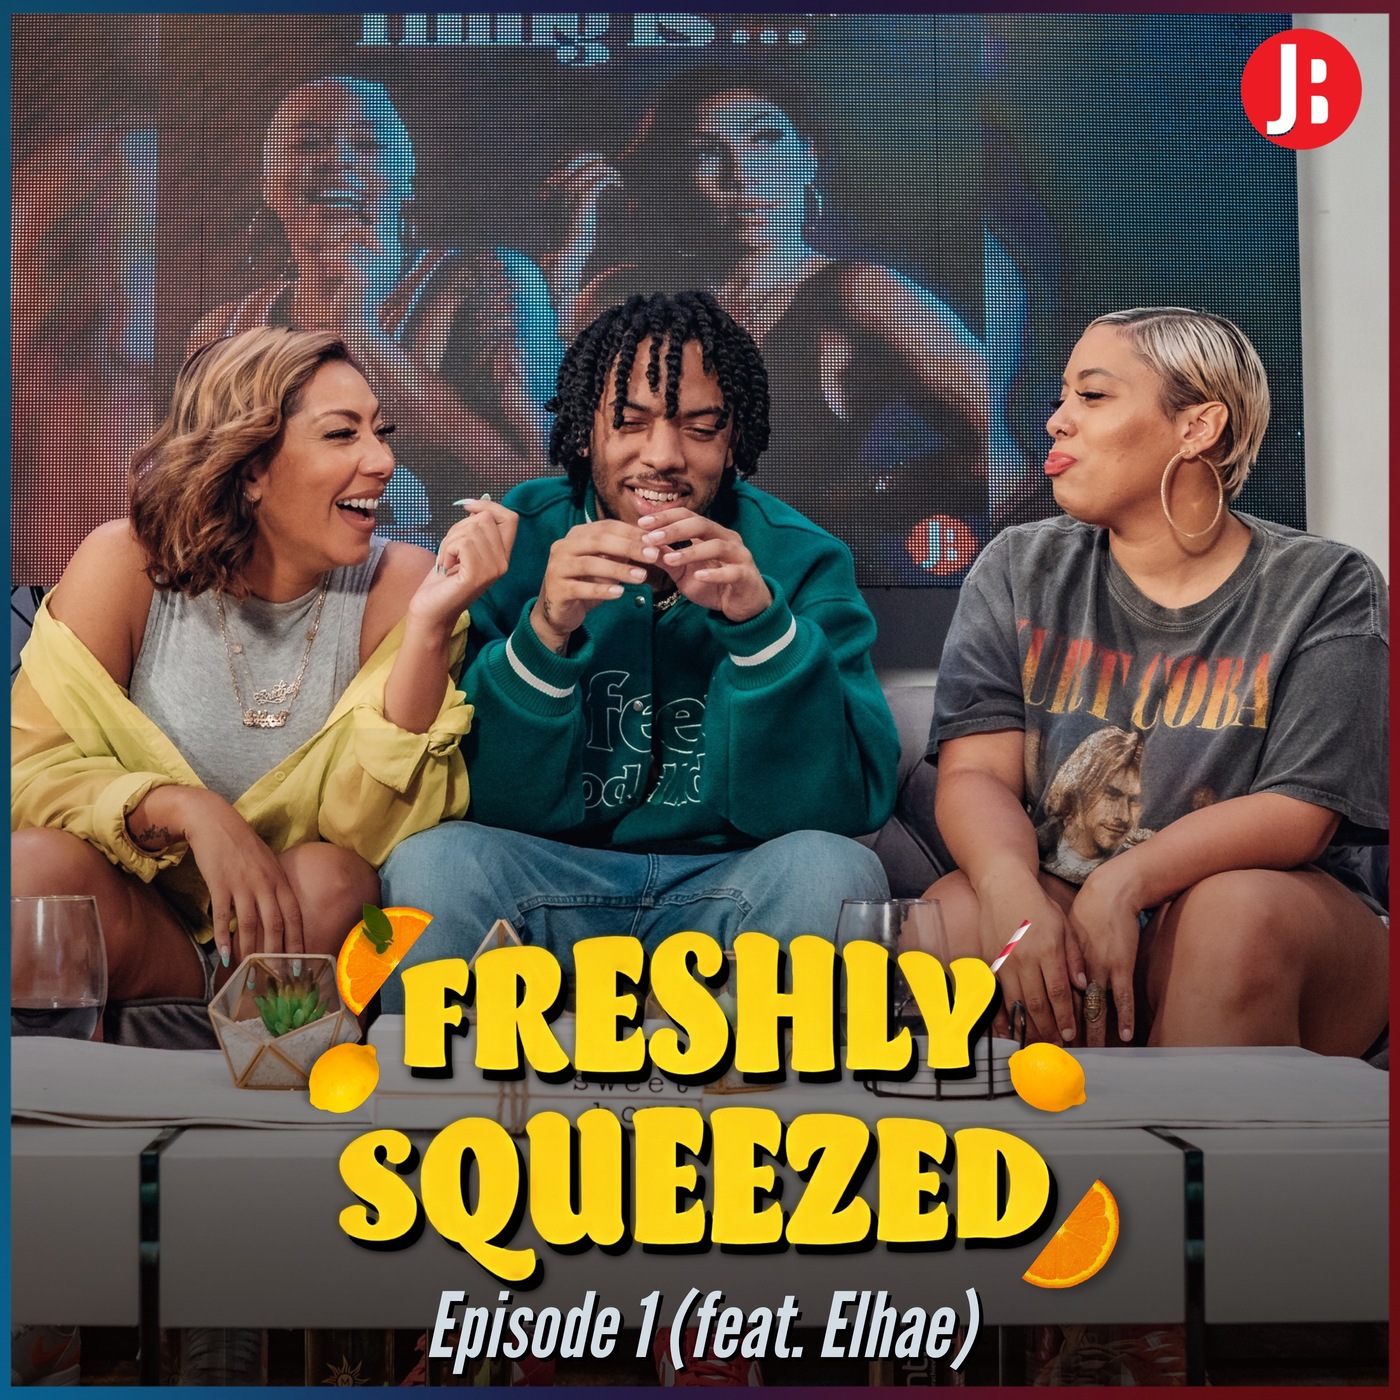 Freshly Squeezed Ep. 1 (Feat. Elhae)